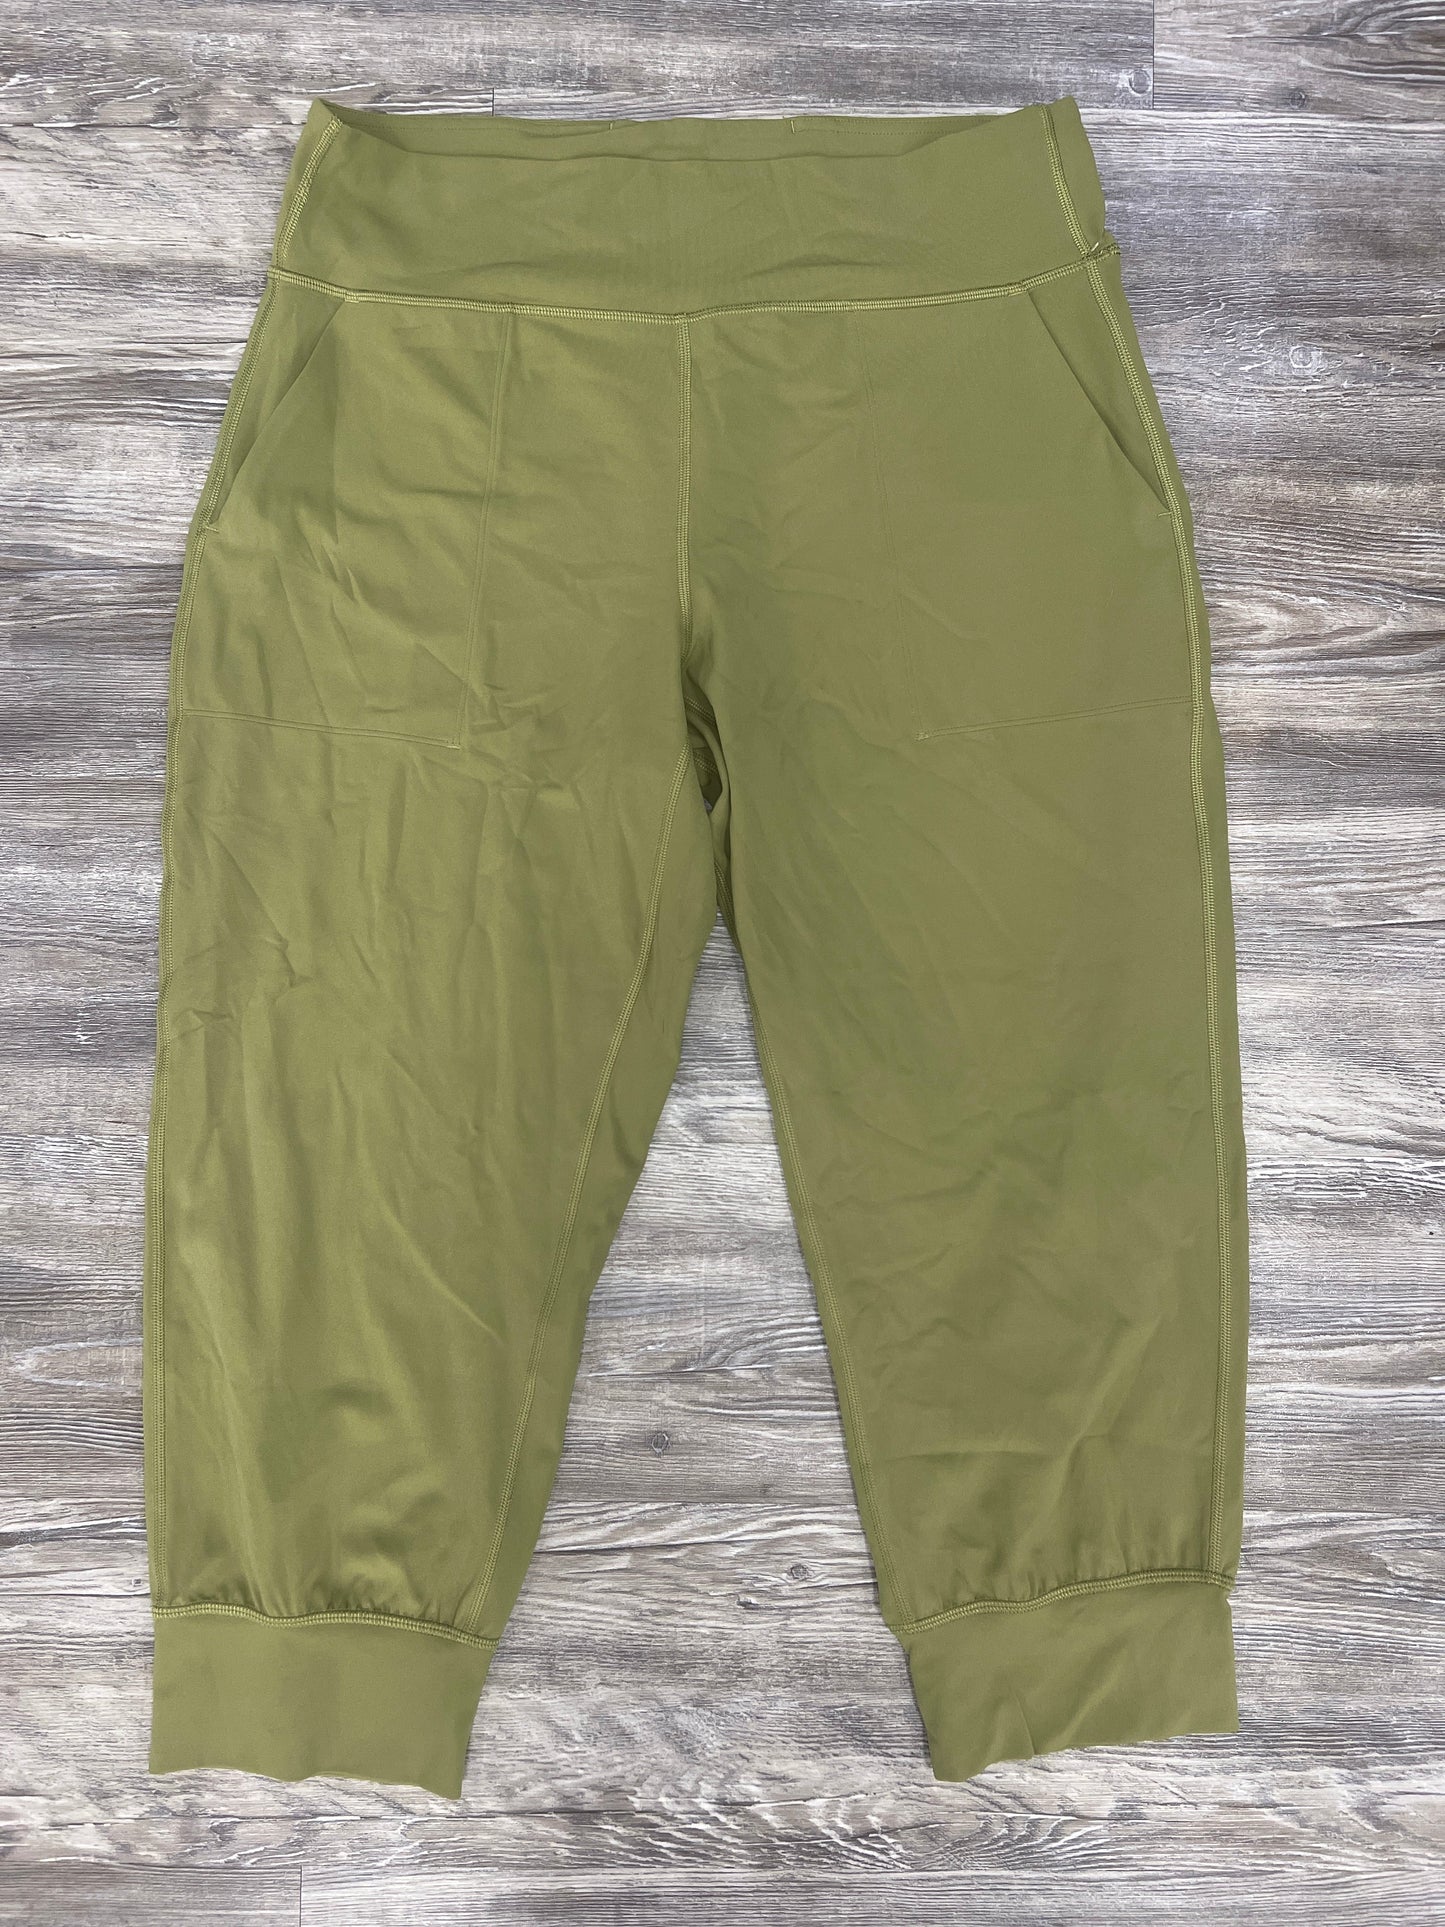 Green Athletic Pants Lululemon, Size 12